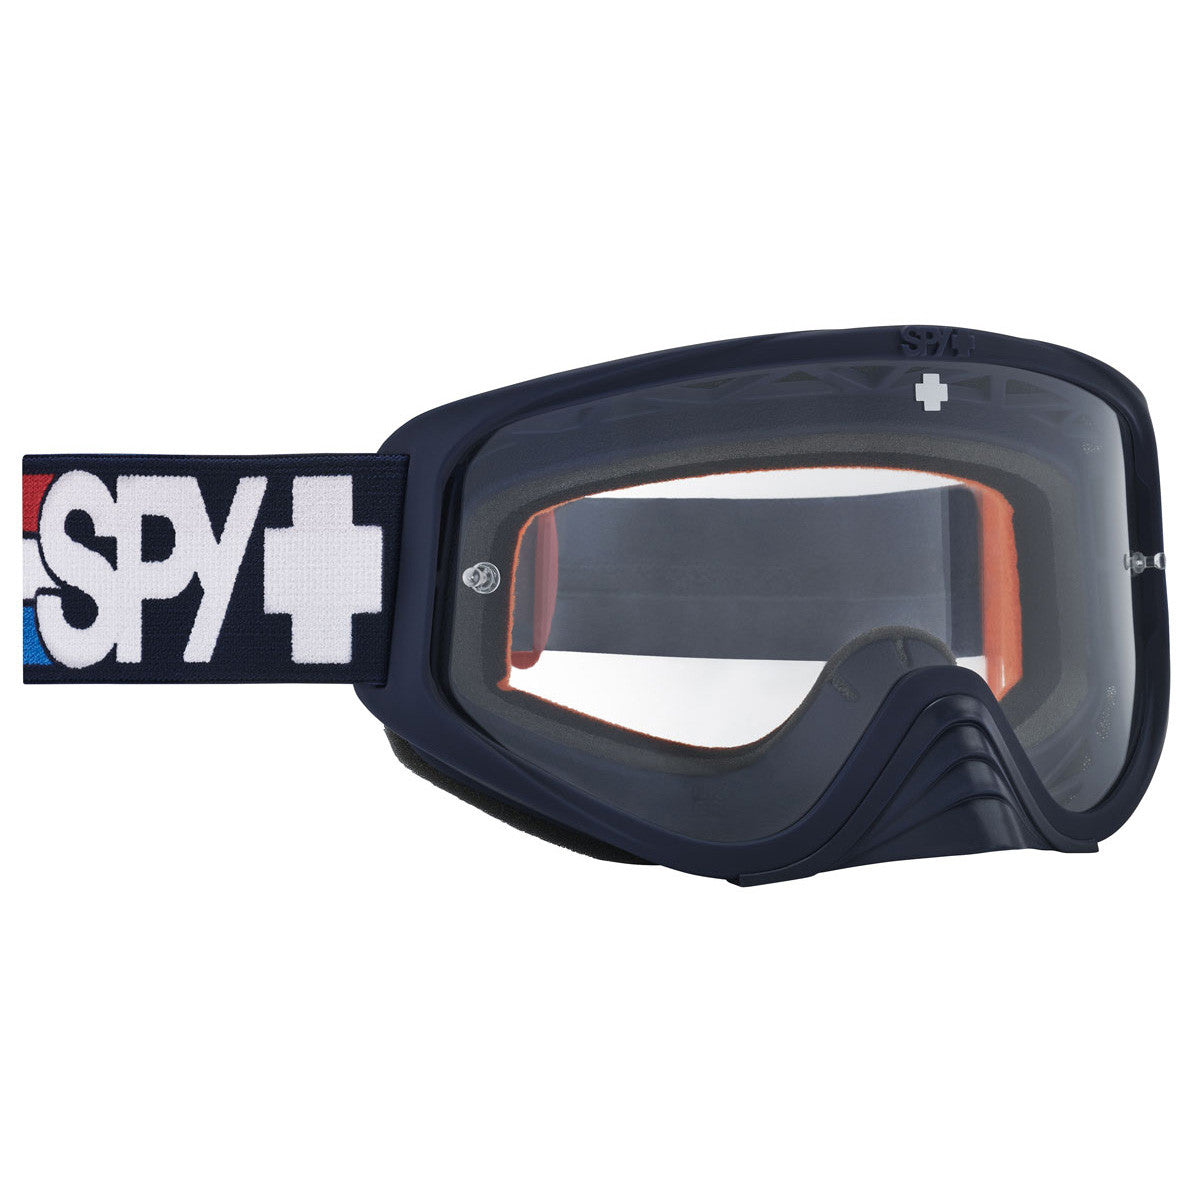 Spy Woot Goggles  Matte Usa Small, Small-Medium, Medium, Medium-Large M 56-58